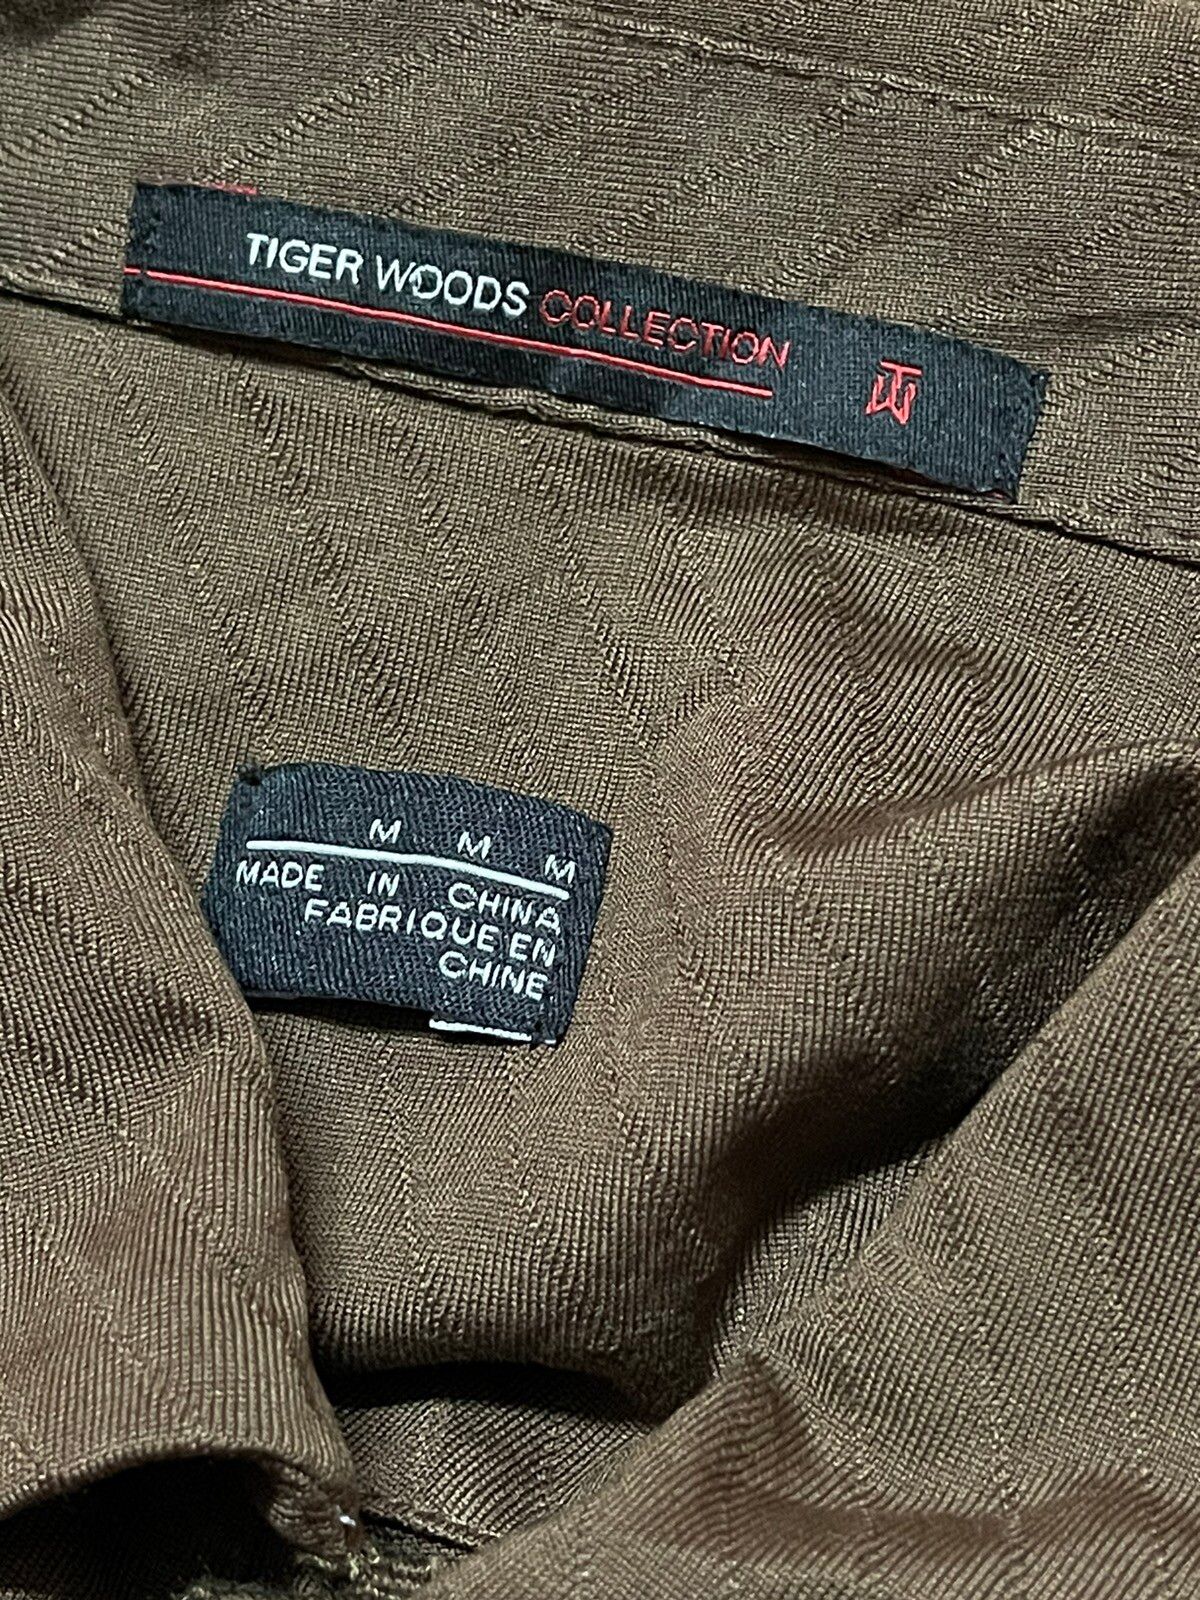 Vintage Nike Golf Tiger Woods Collection - 2